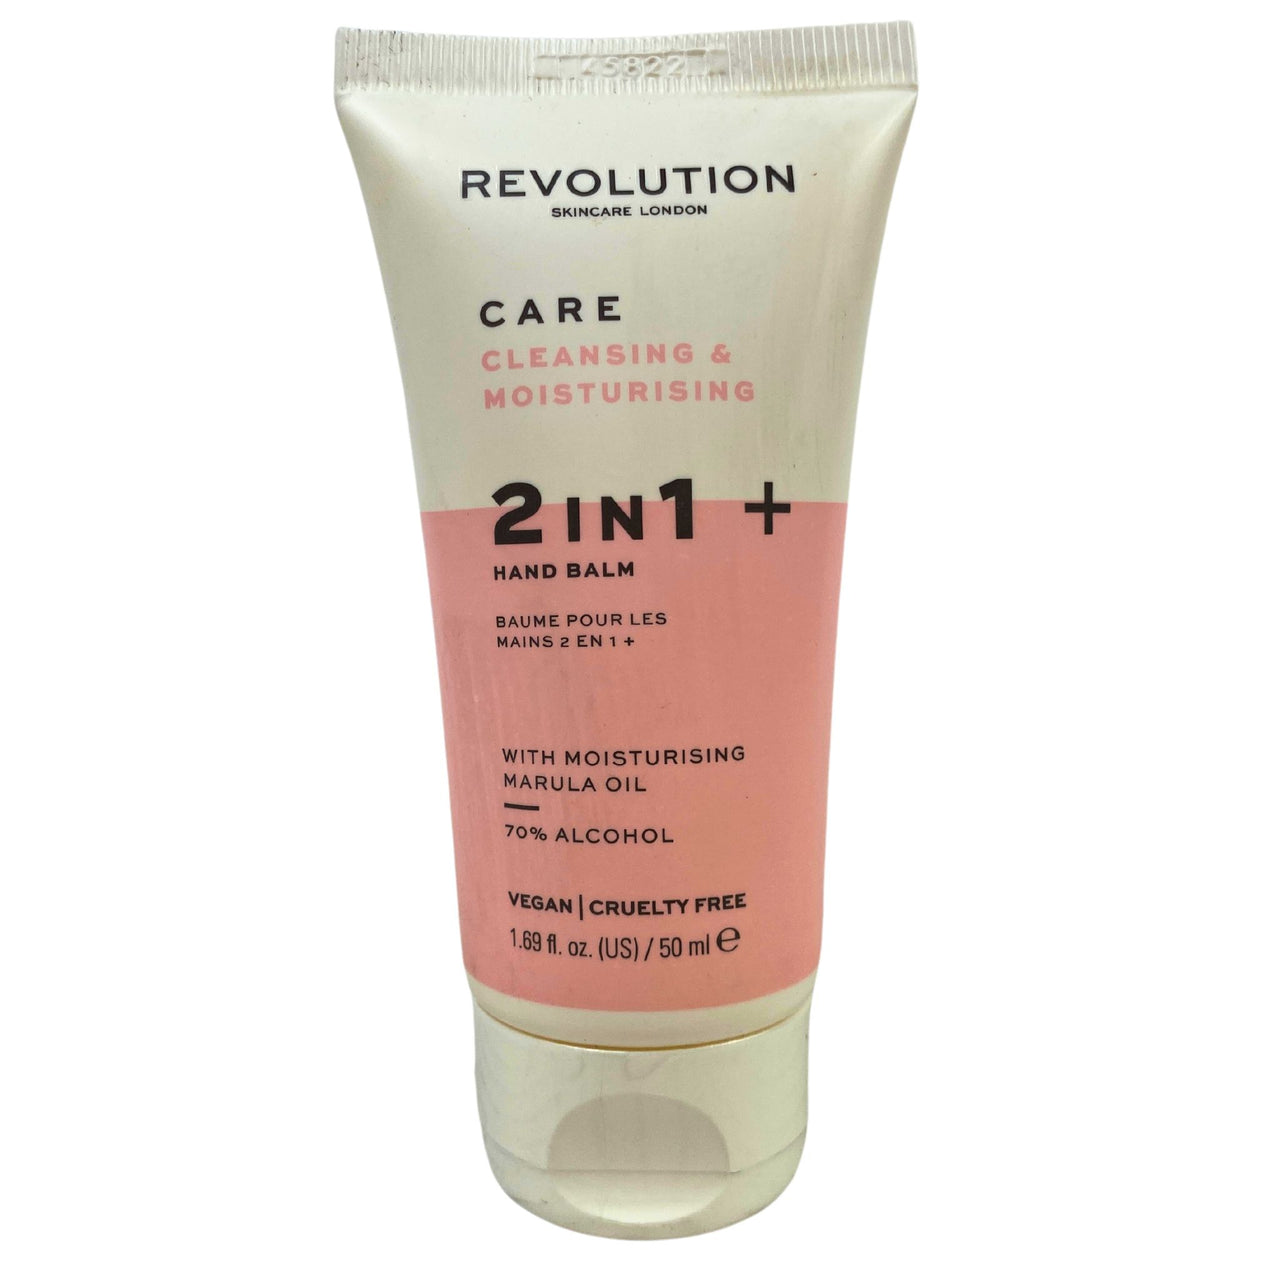 Revolution Skincare London Care Cleansing & Moisturizing 2 IN 1